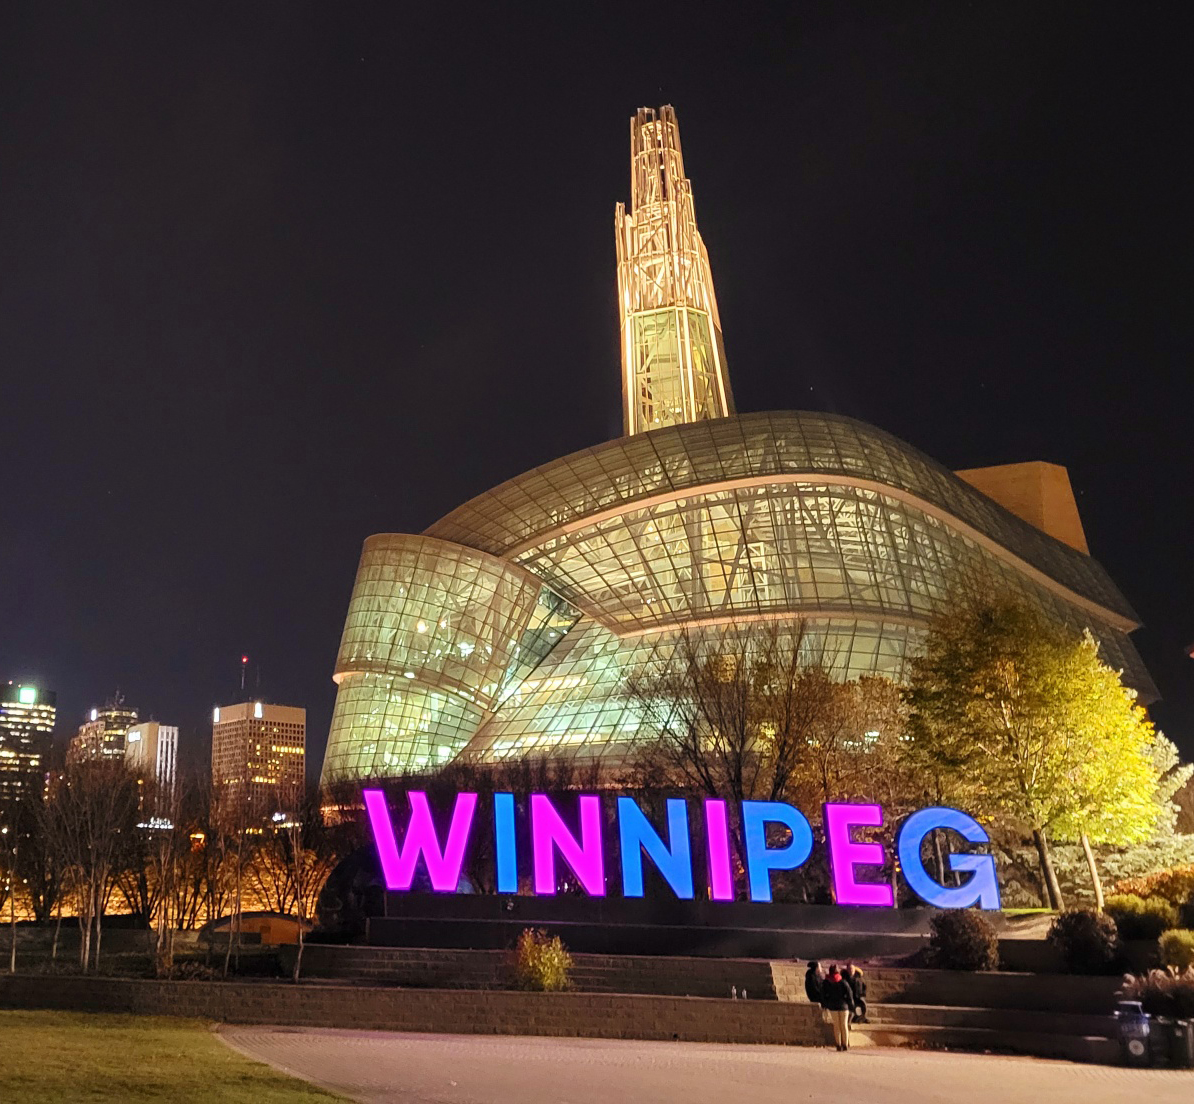 The Winnipeg sign at City Hall in Winnipeg was lit purple and blue